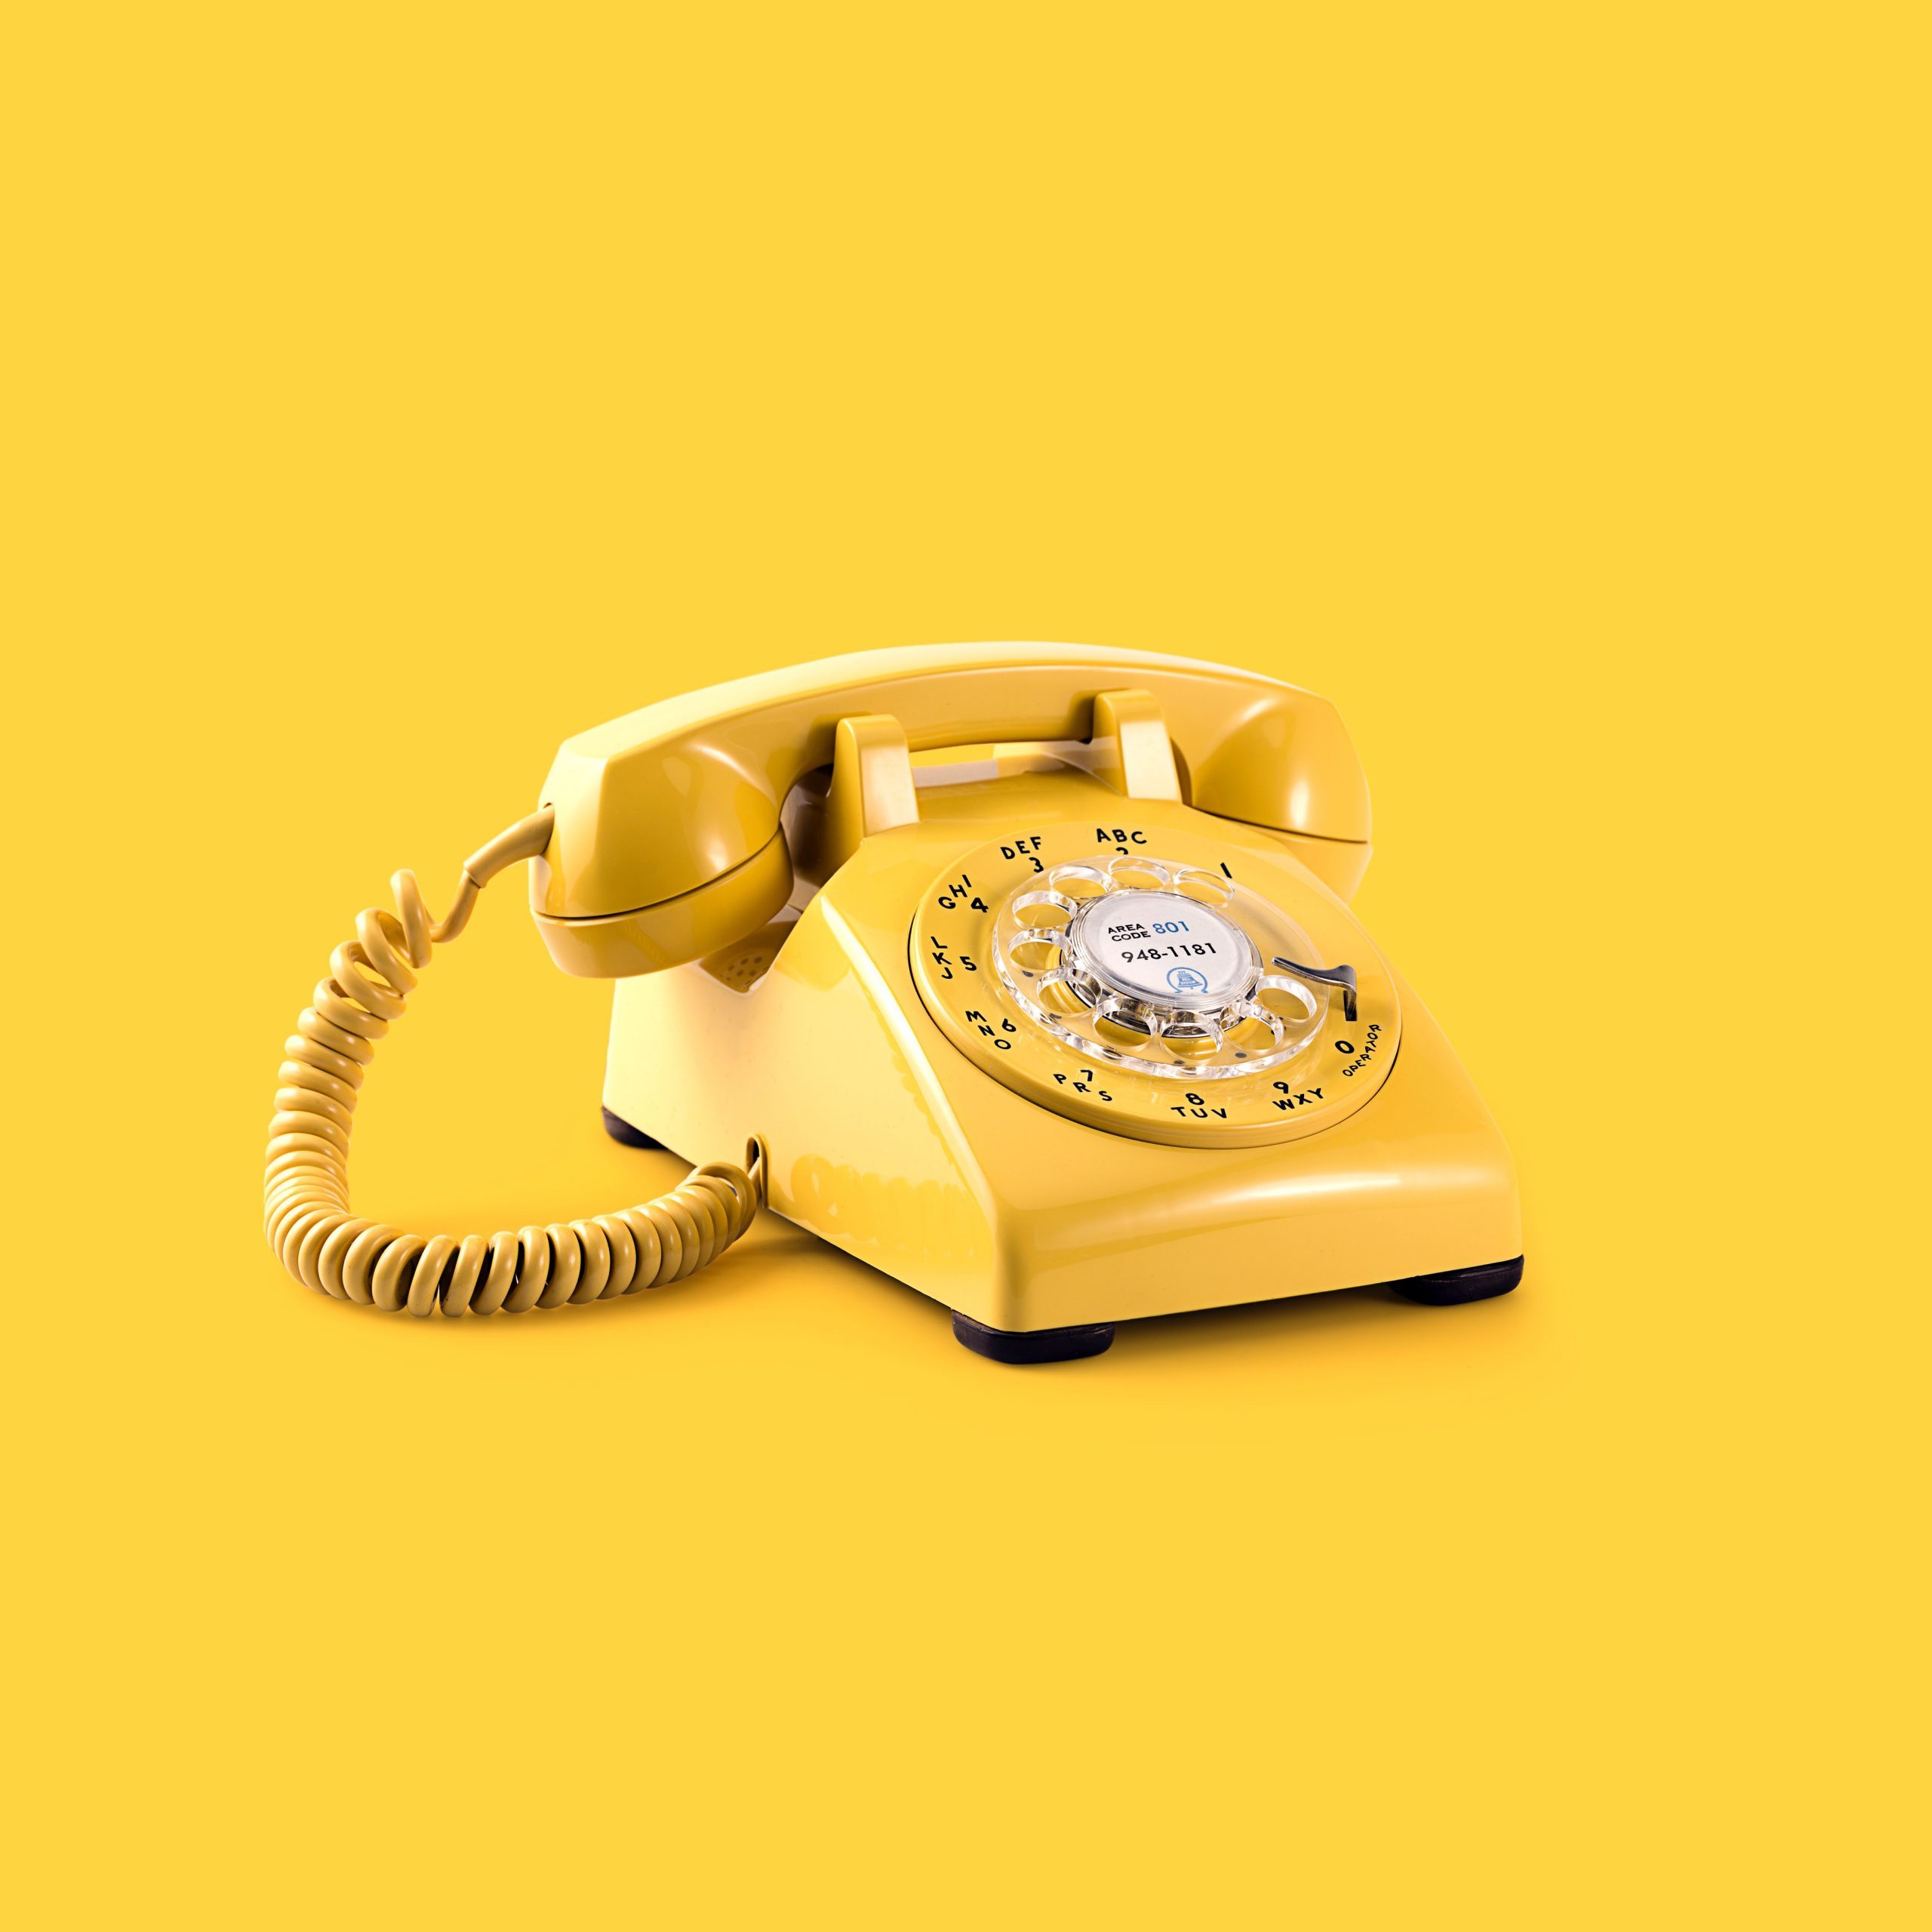 Yellow telephone on yellow background